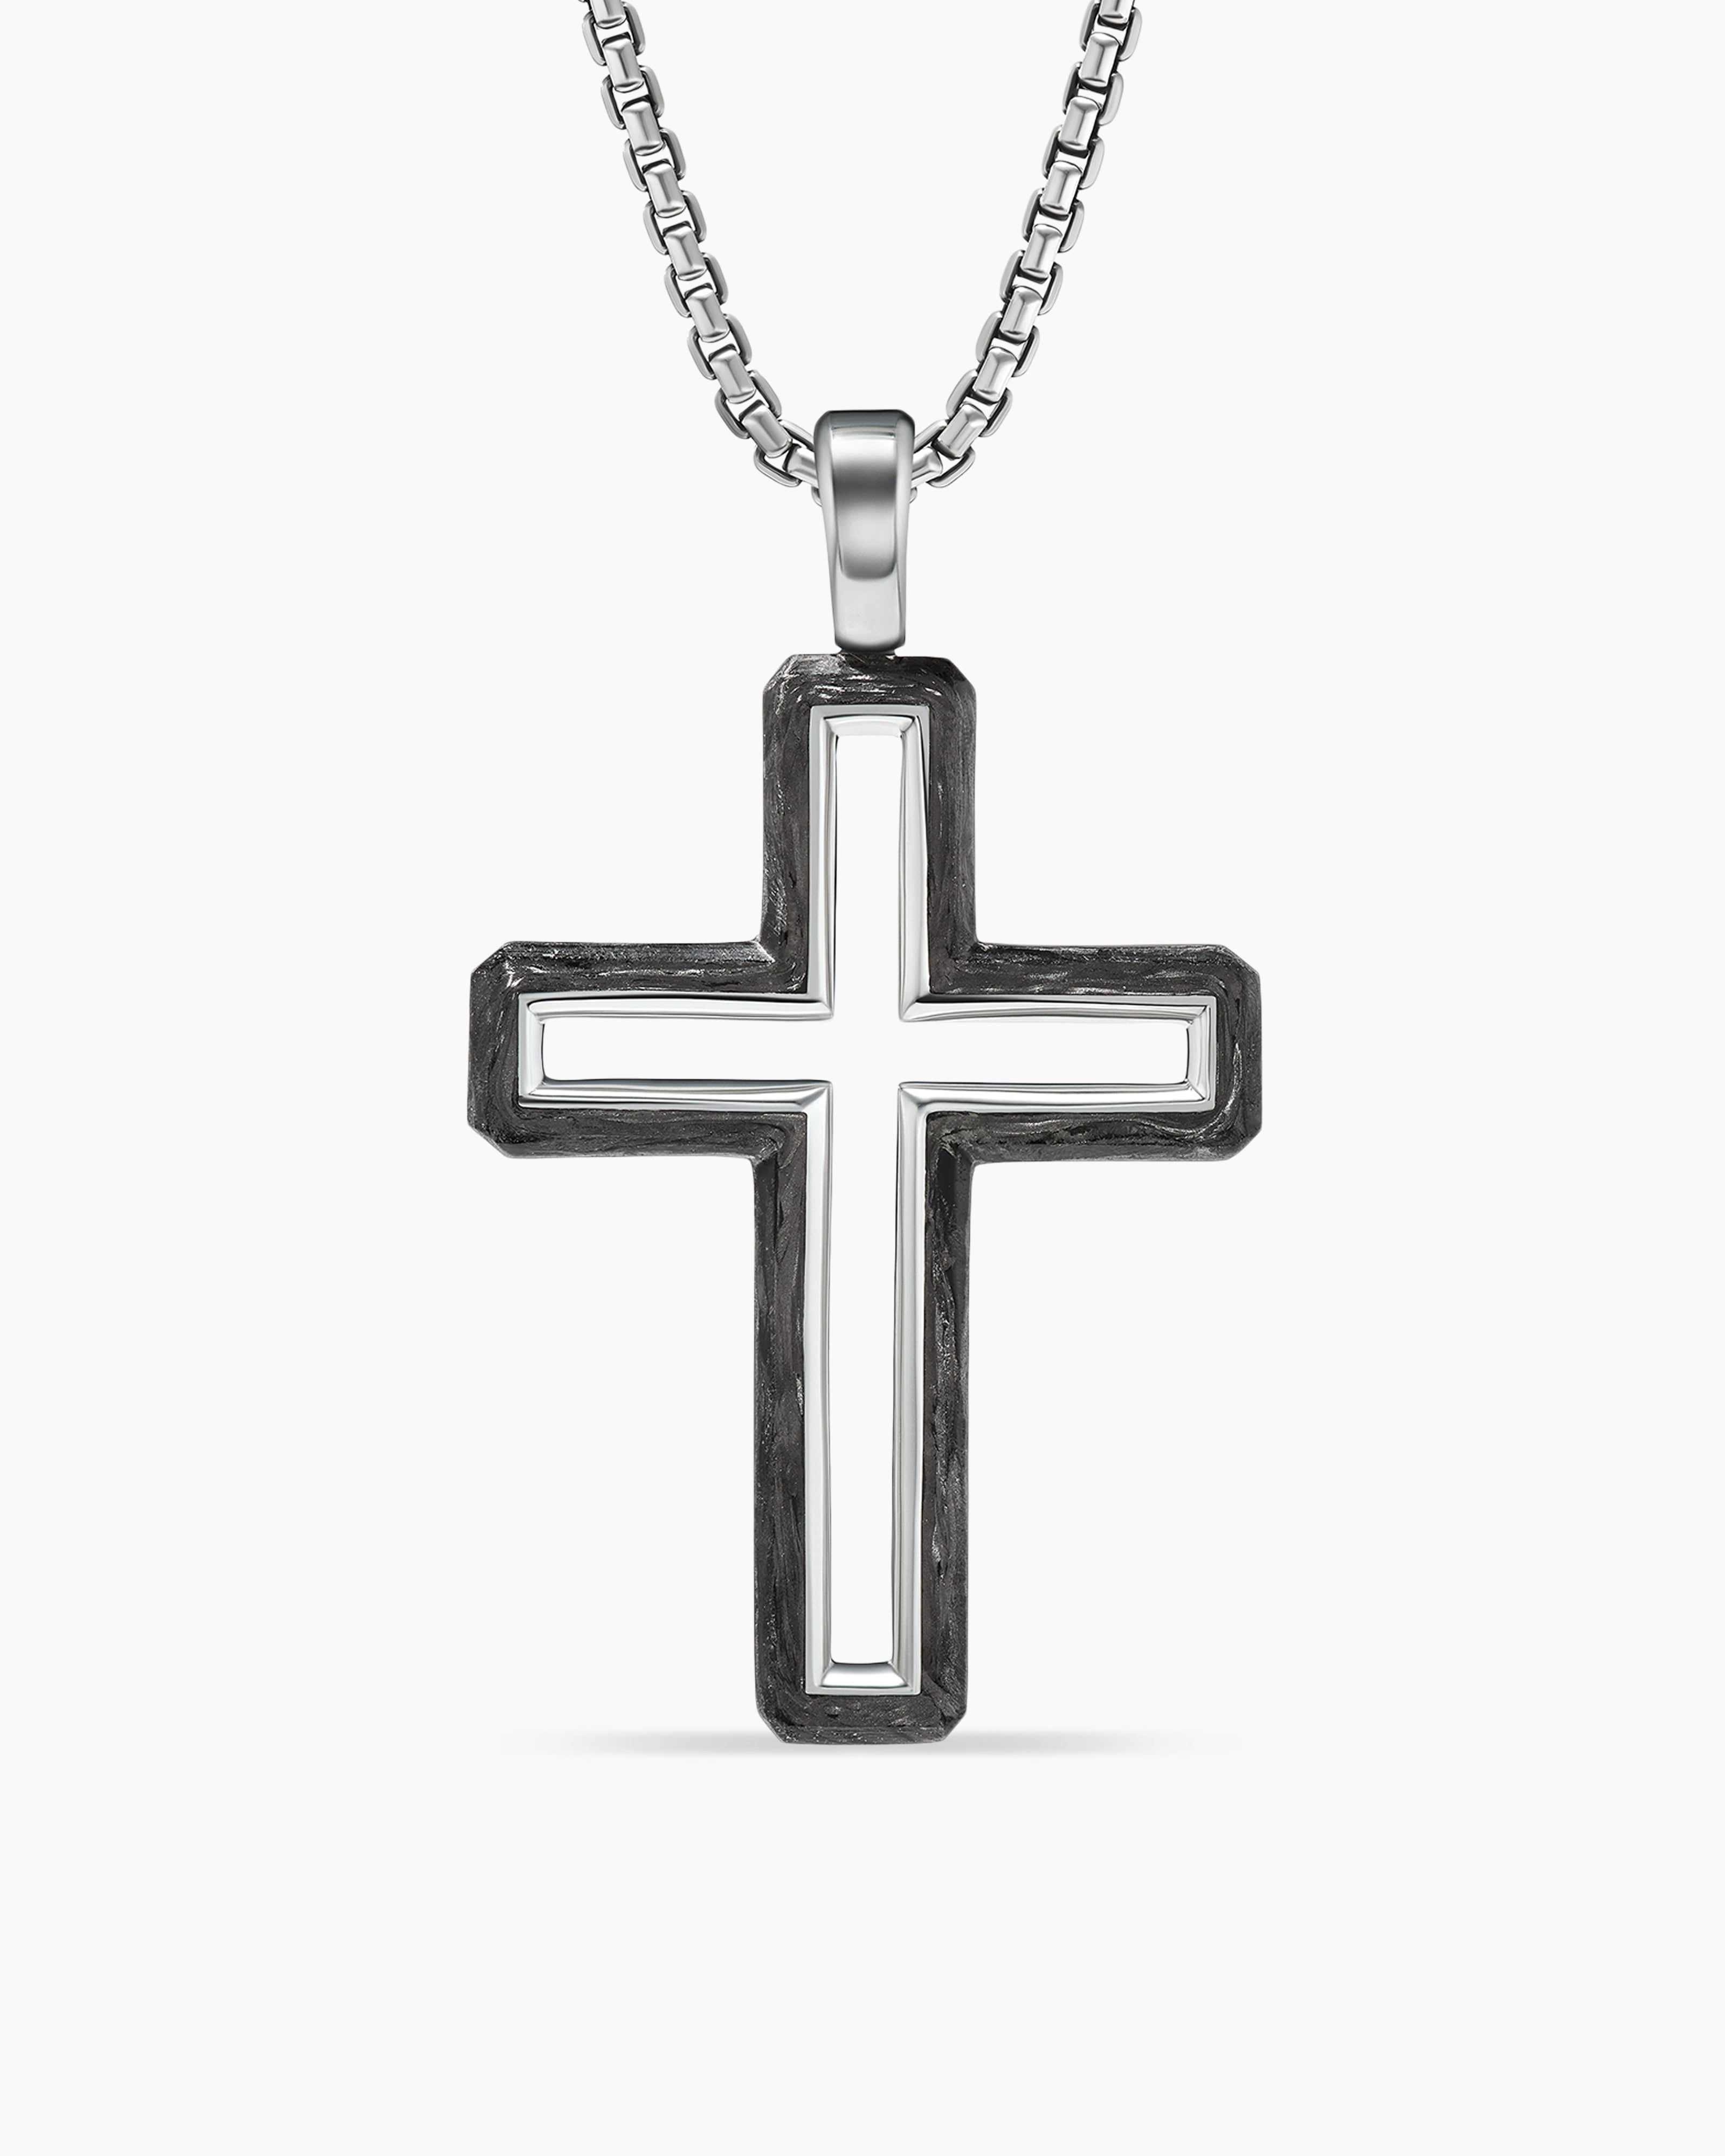 LUXE Mens 14k White Gold Cross Pendant MASCULINE Cross Necklace for Men  Plated | eBay